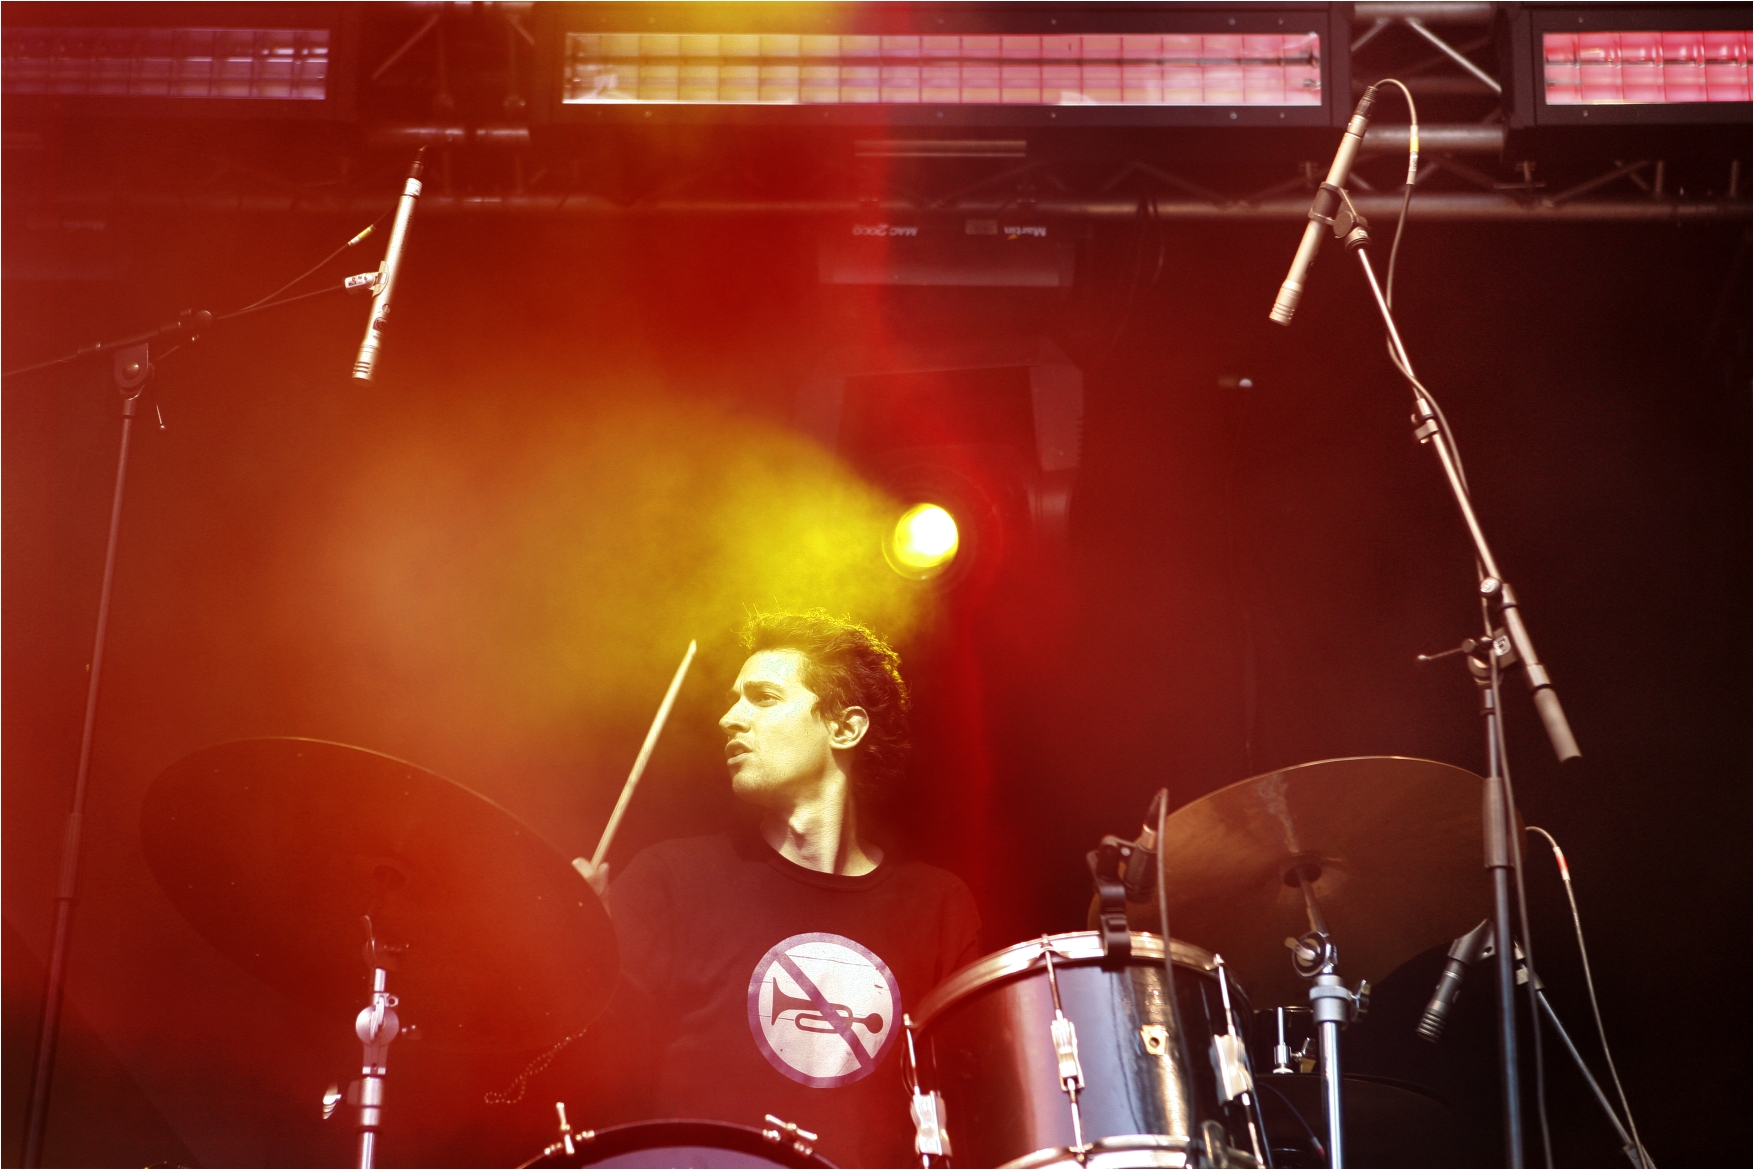 Stefan Pasborg playing drums